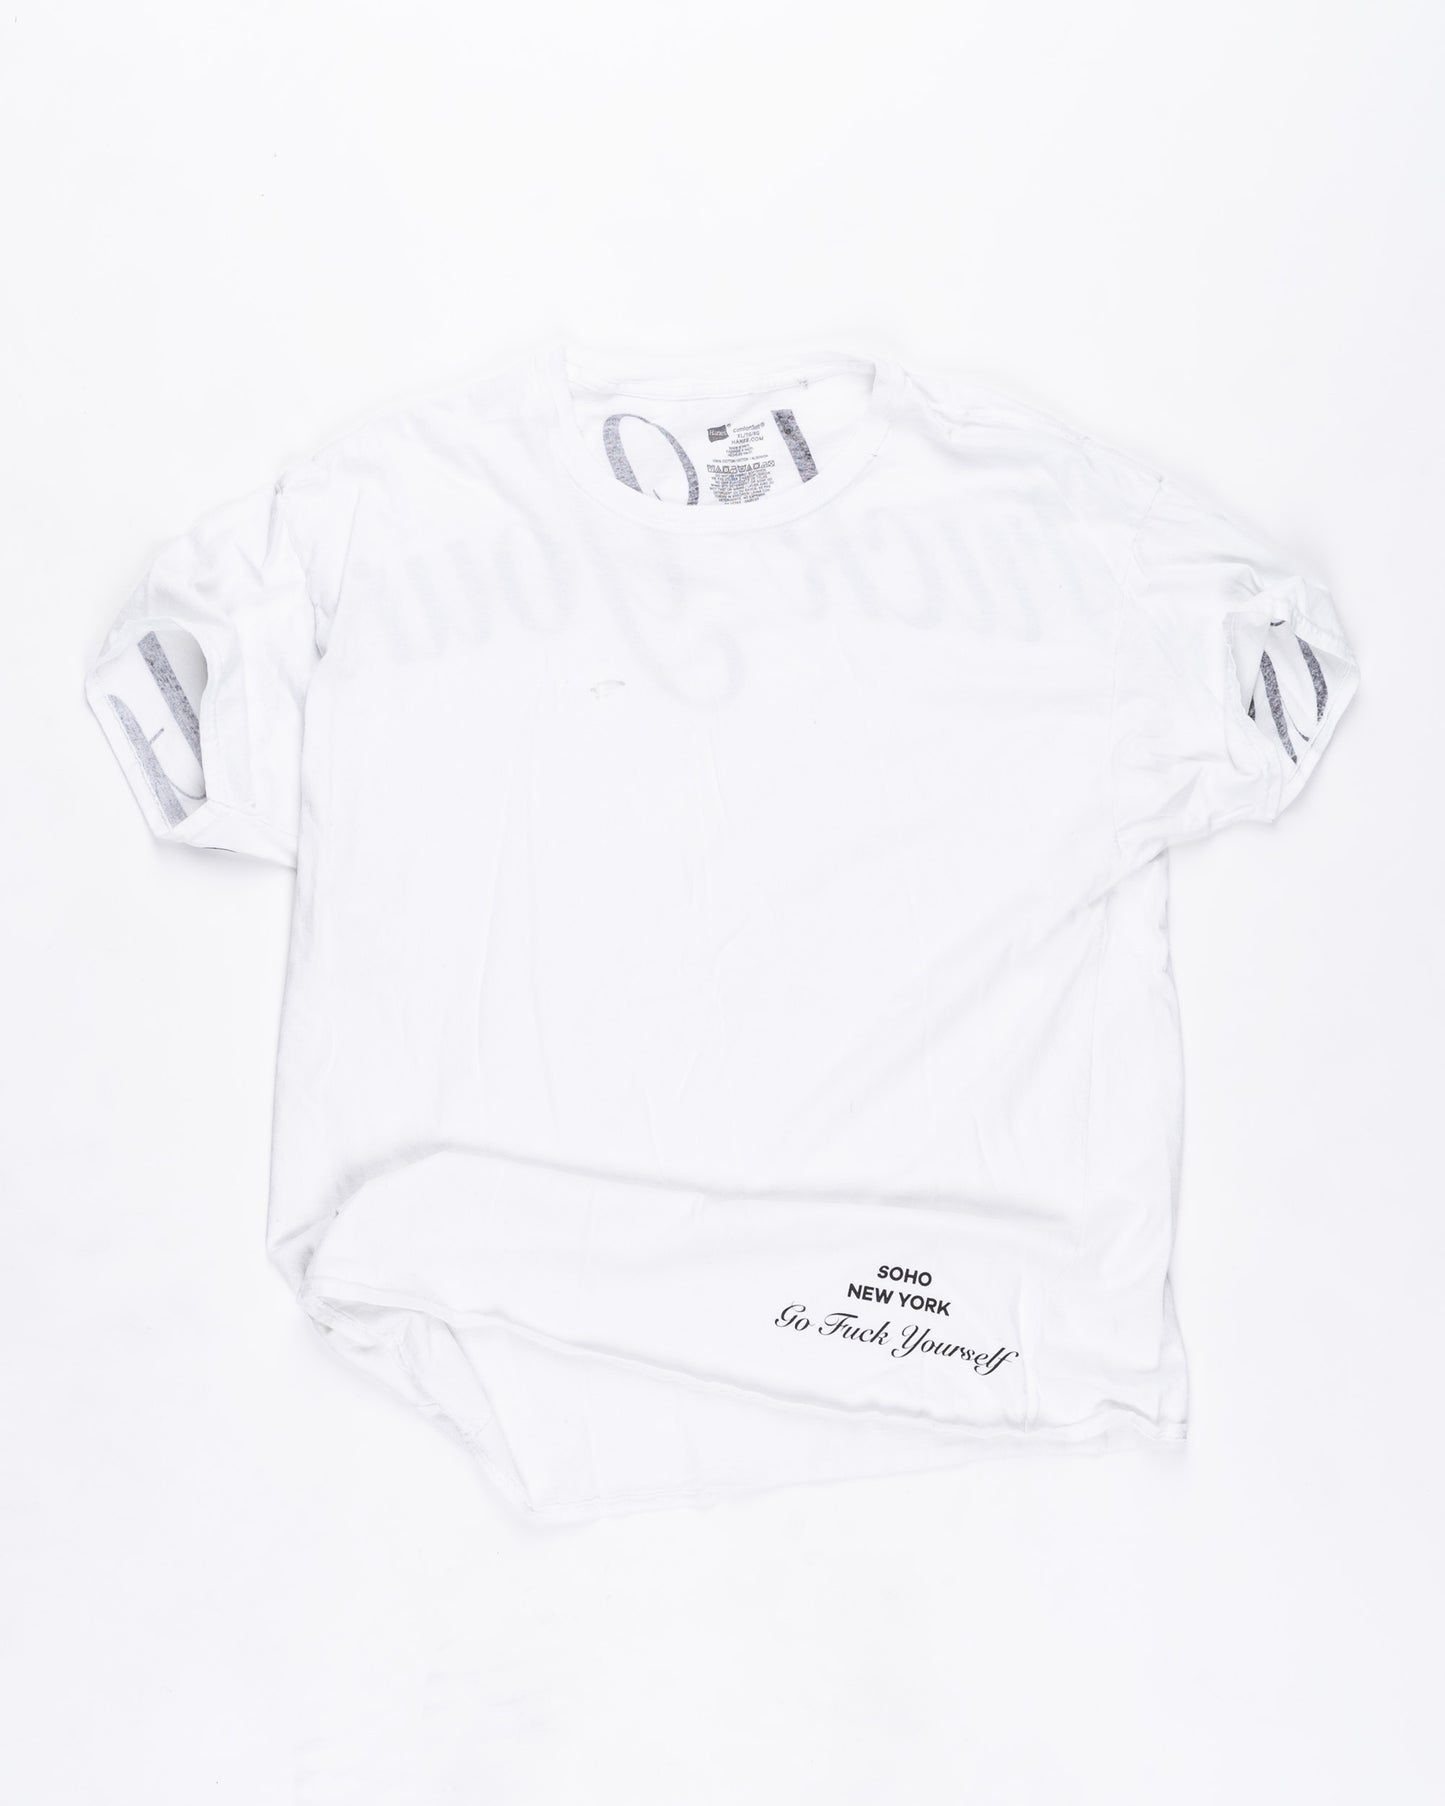 White With Black Print T-Shirt Size: XLarge